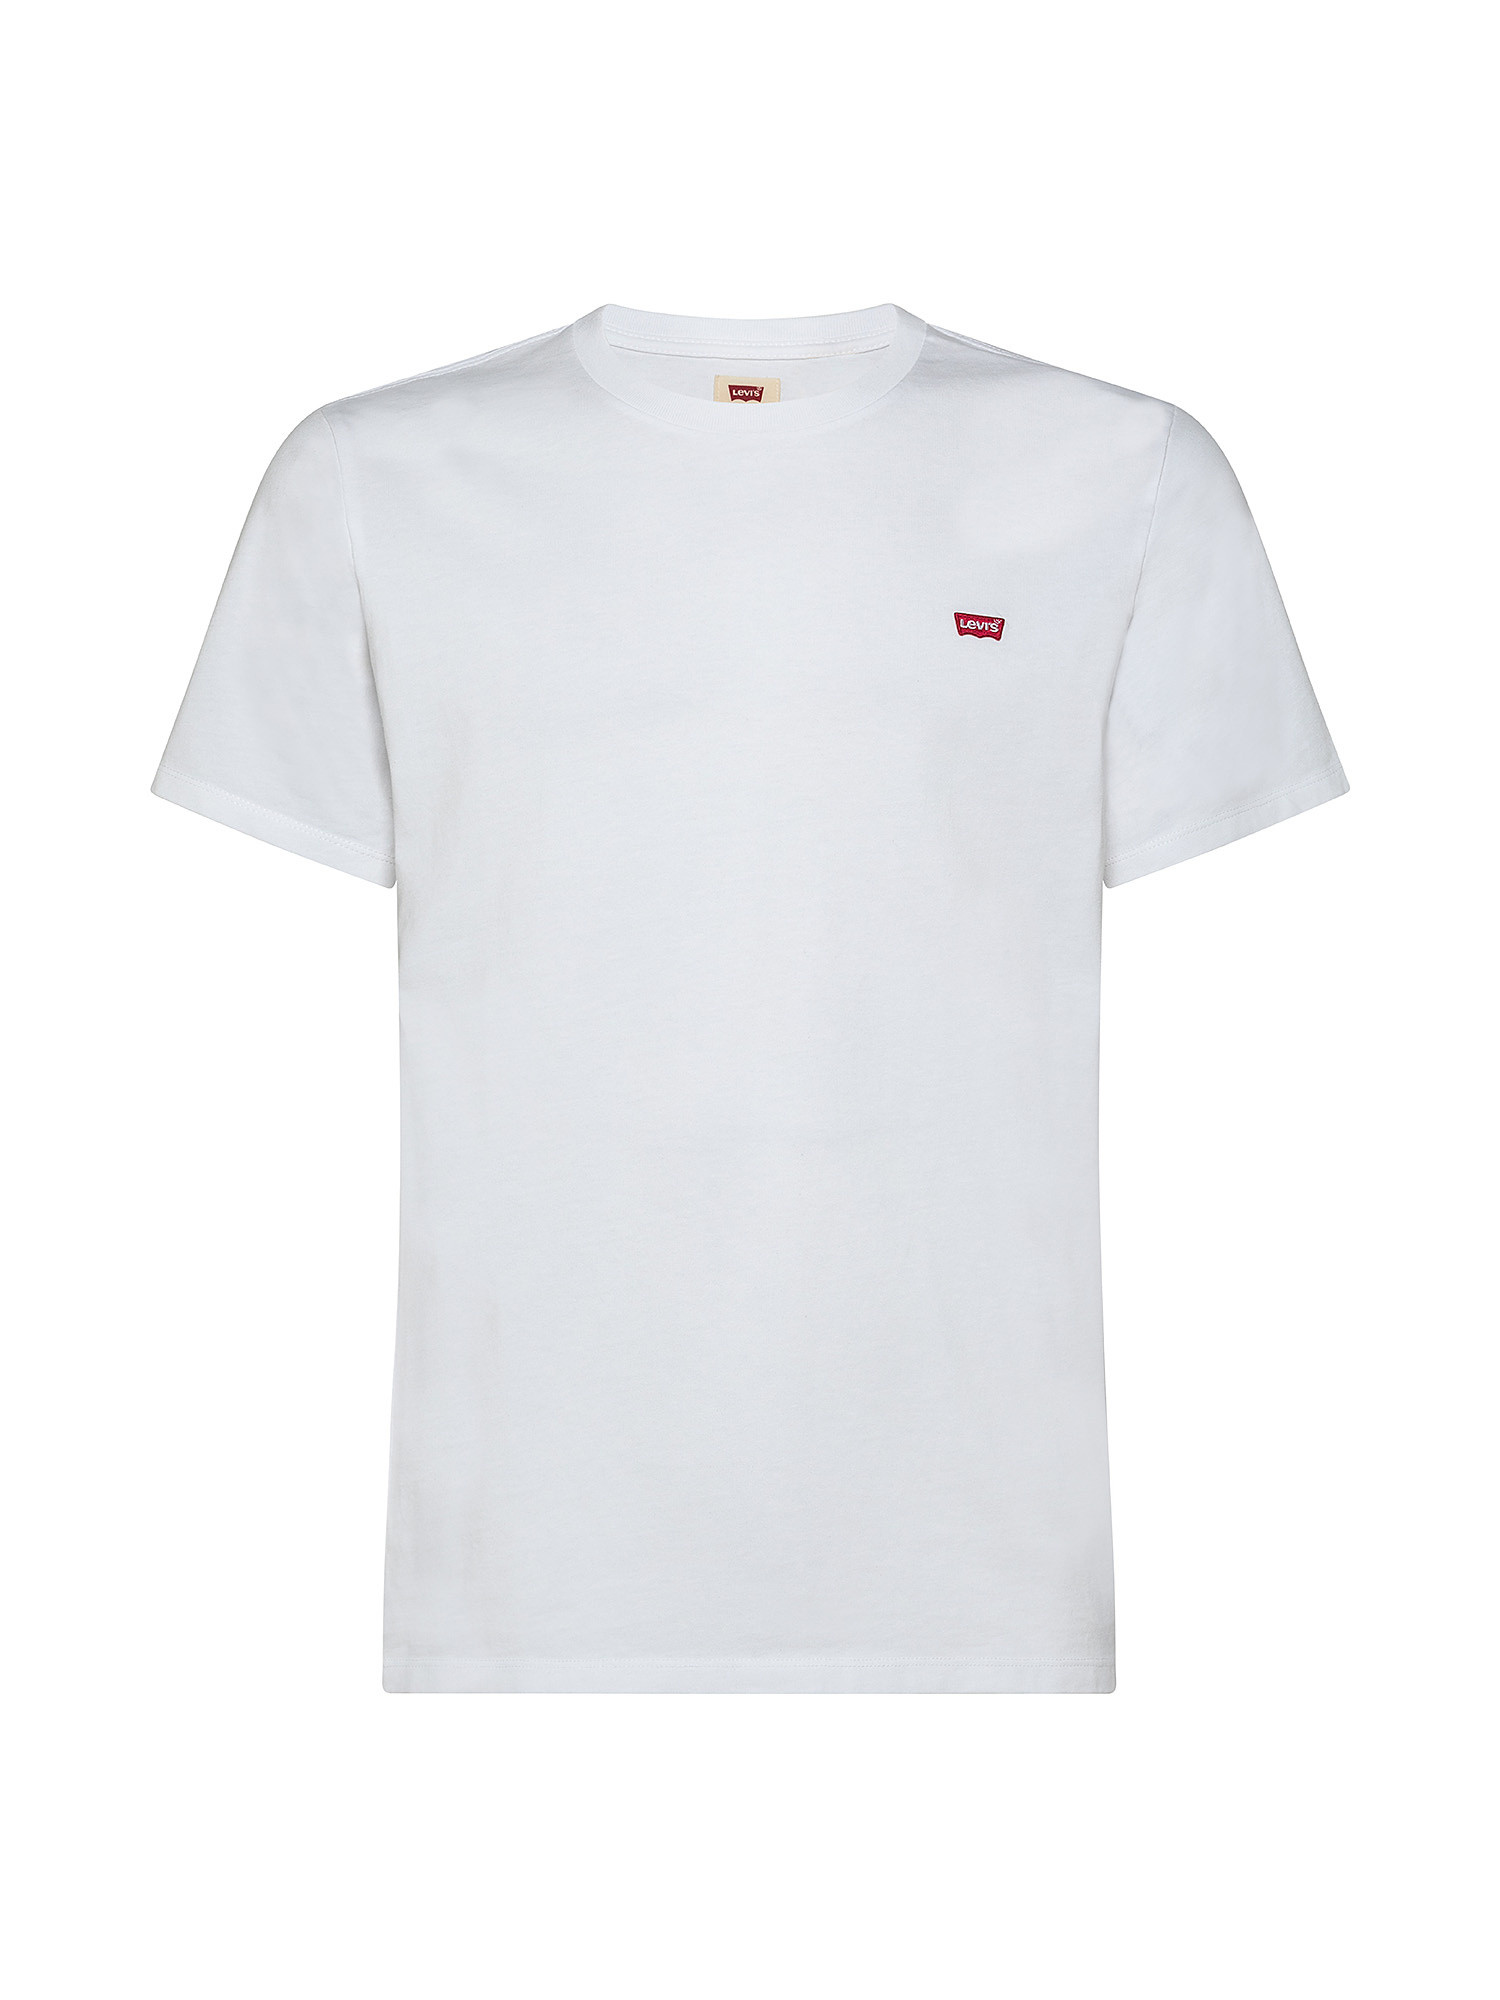 T-shirt Original con logo, Bianco, large image number 0